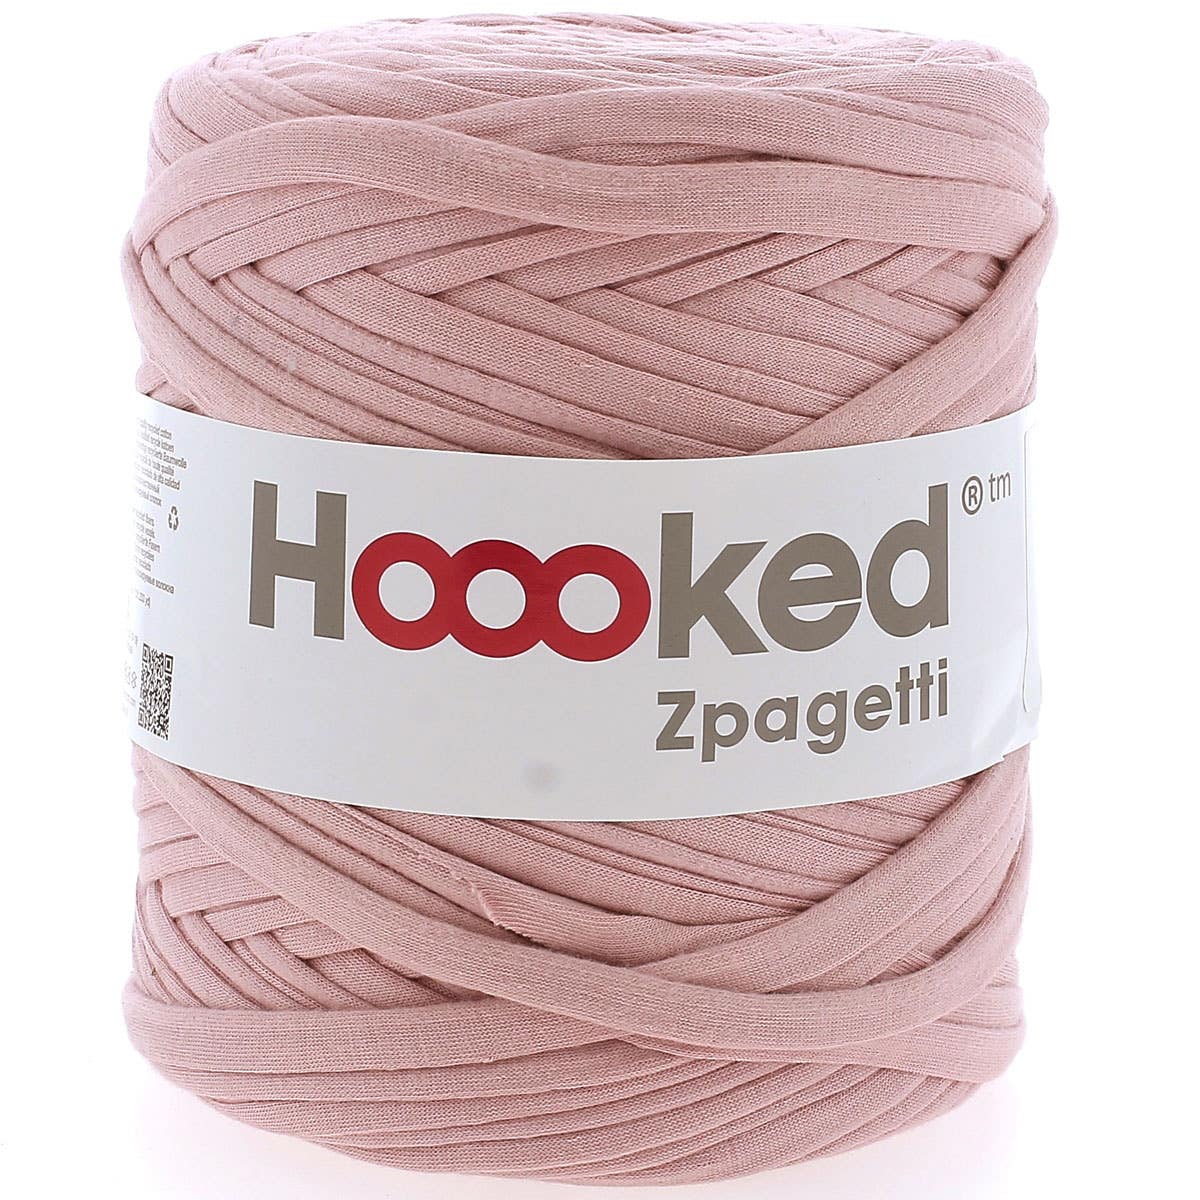 Hoooked Zpagetti Solid - T-shirt Yarn